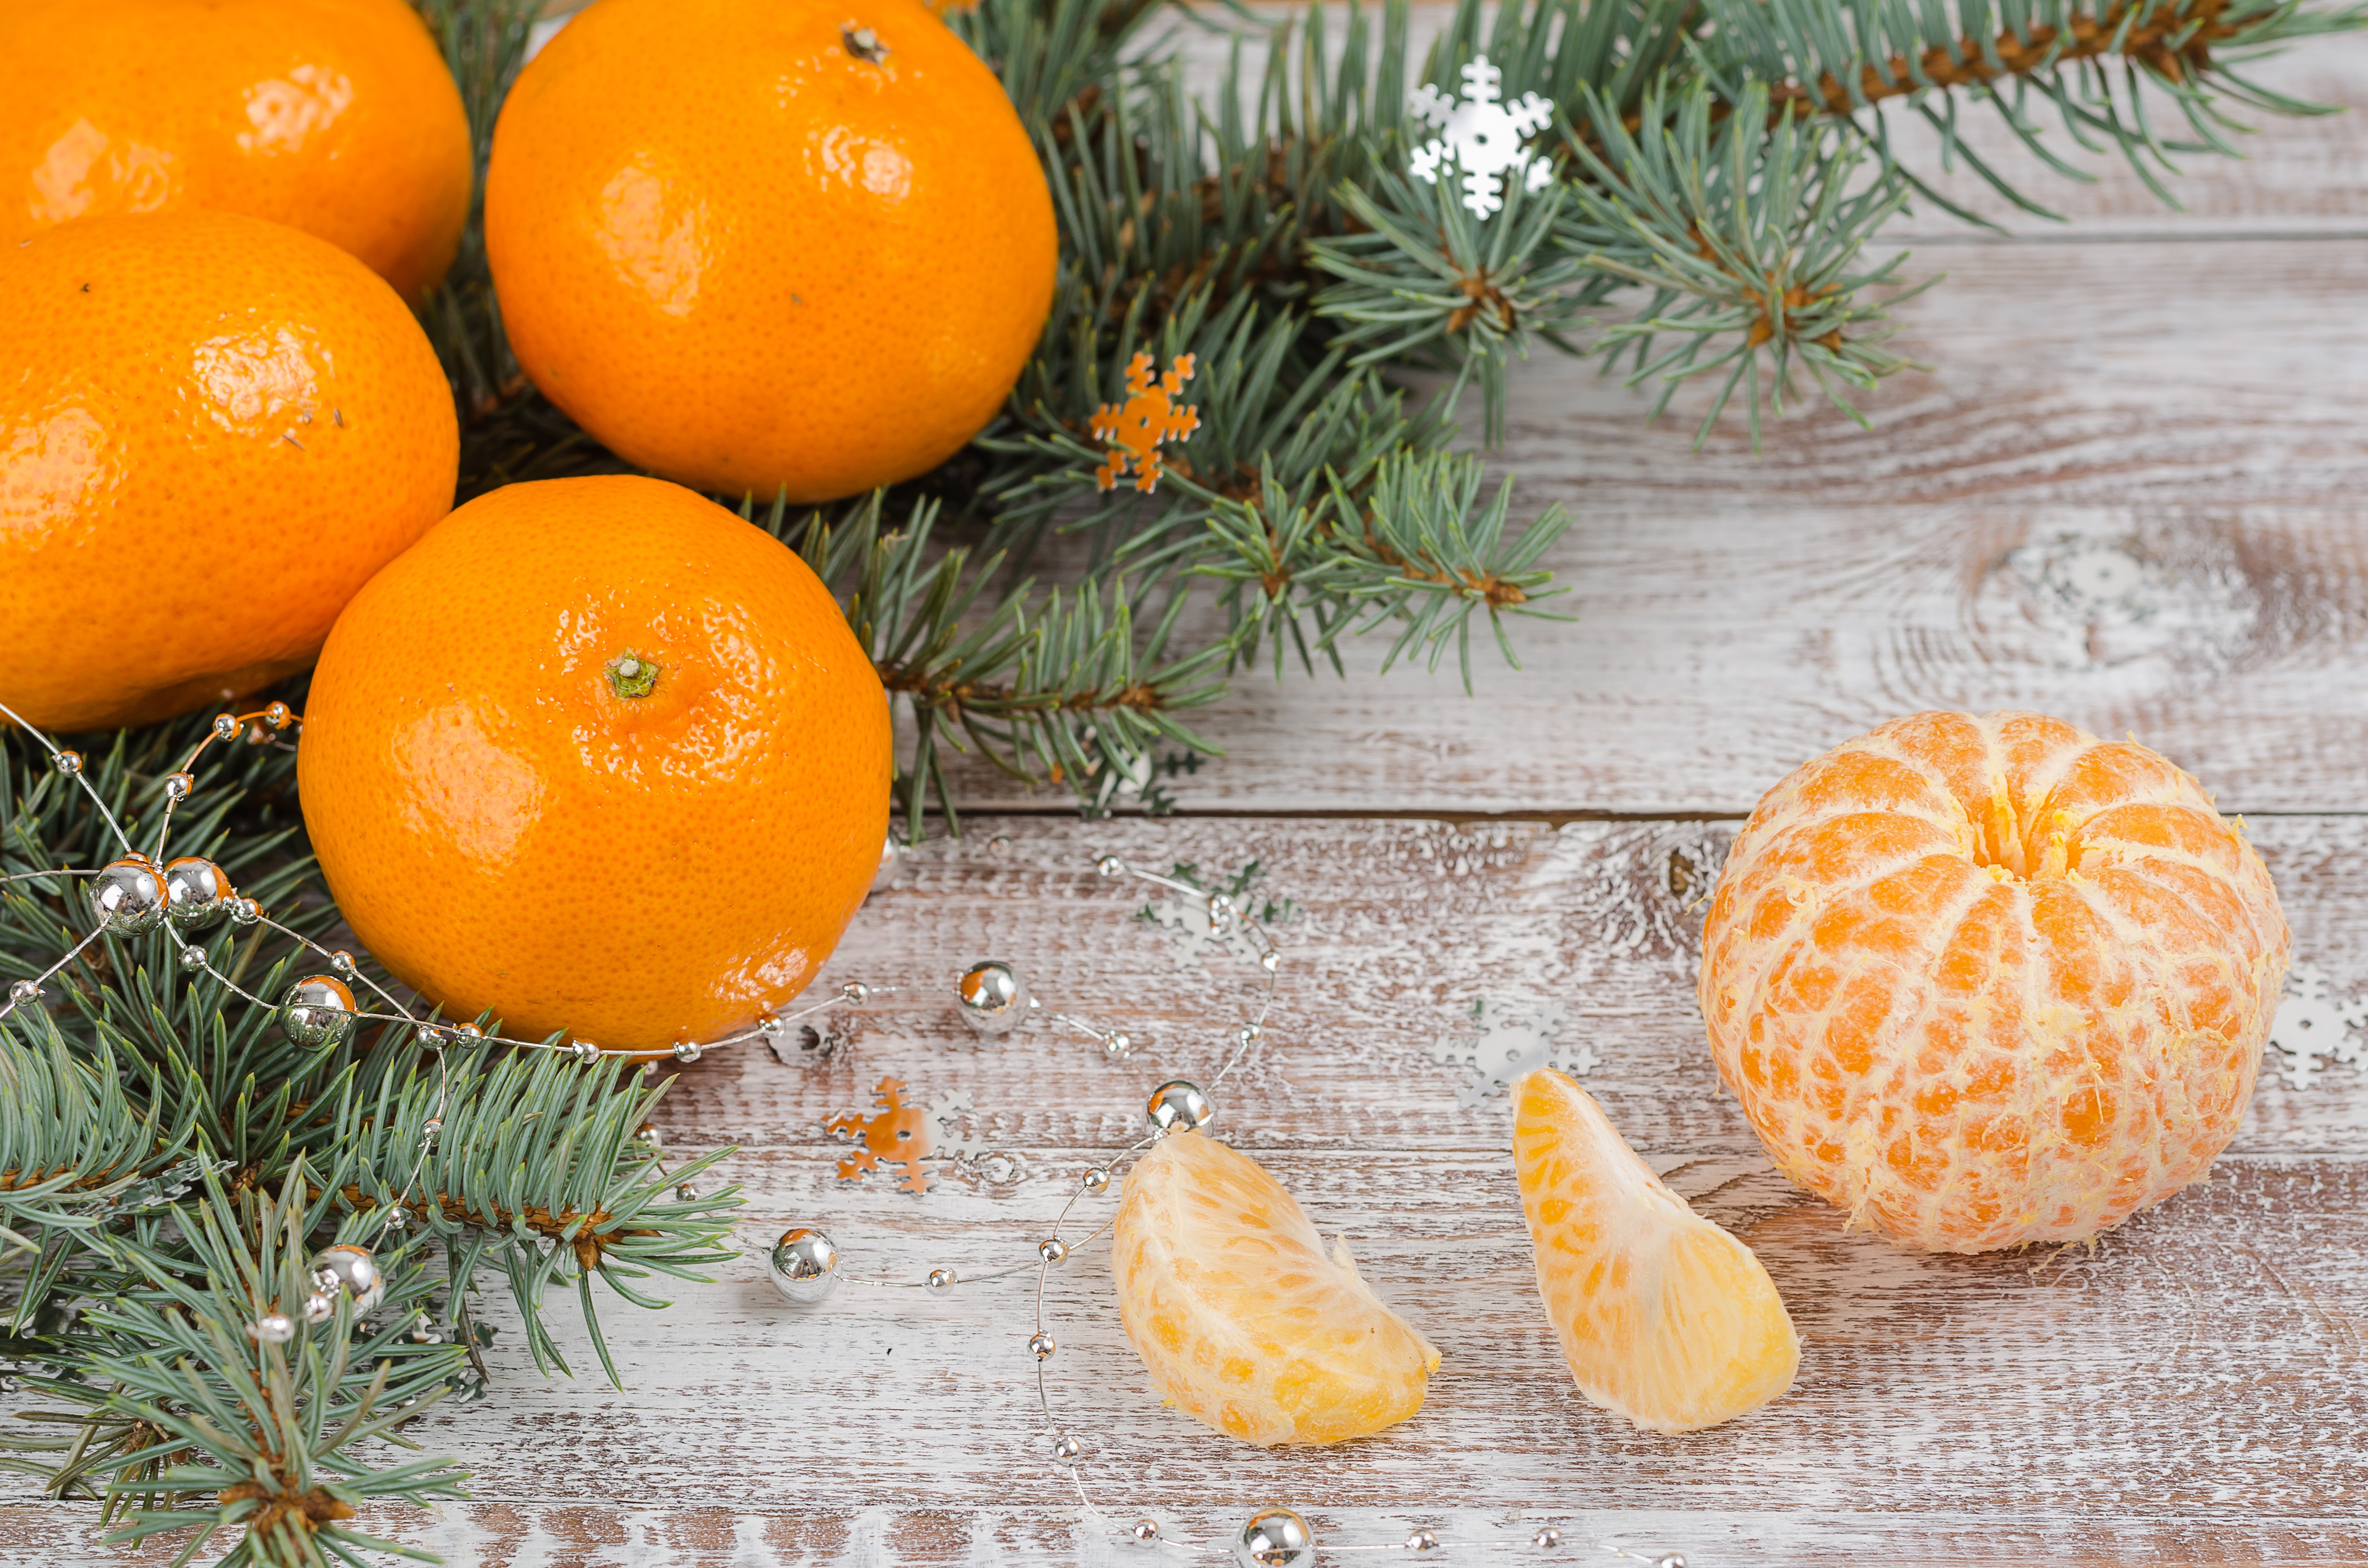 Мандарин мороз. Мандарины и елка. Мандарины новый год. Мандарины на новогоднем столе. Новогодний апельсин.